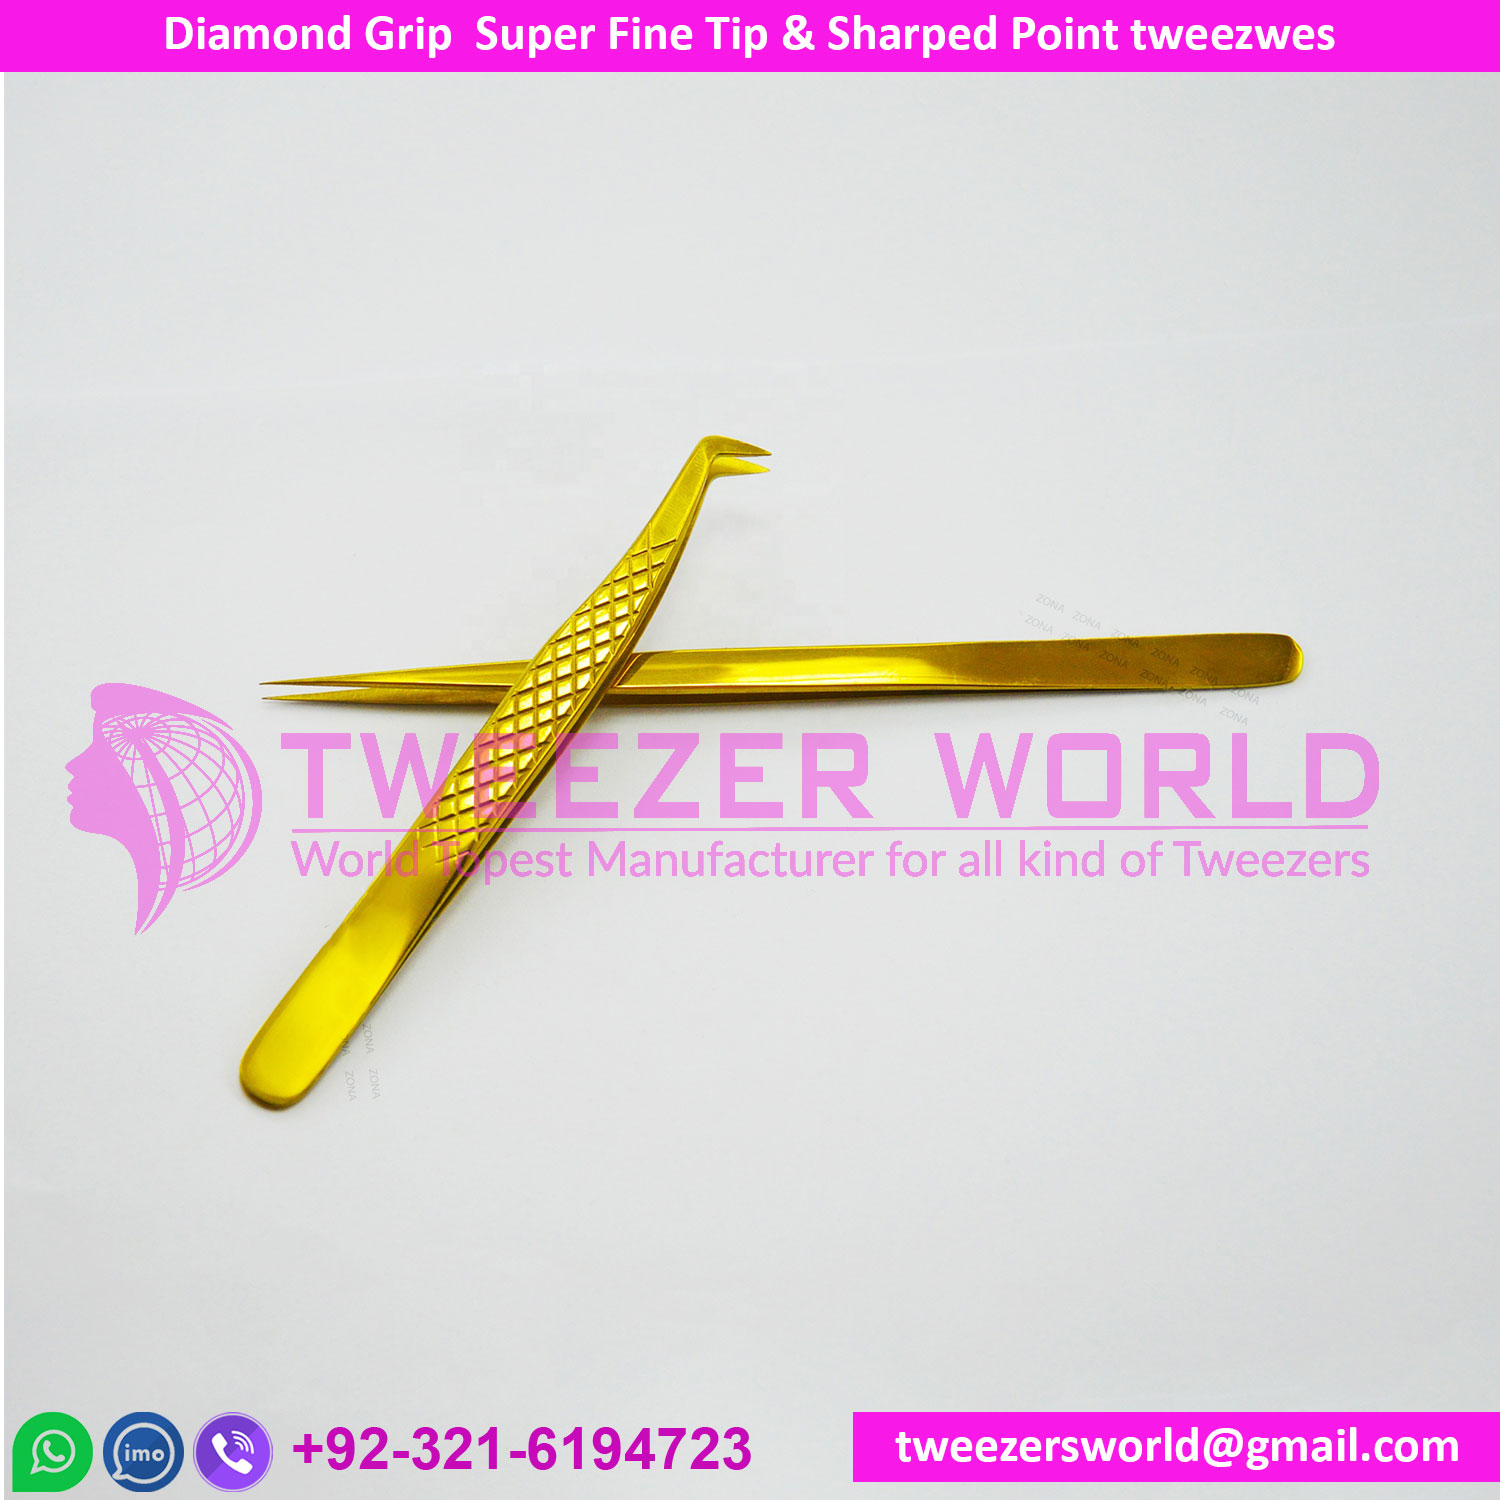 2pcs Diamond Grip Super Fine Tip & Sharped Point eyelash tweezers set